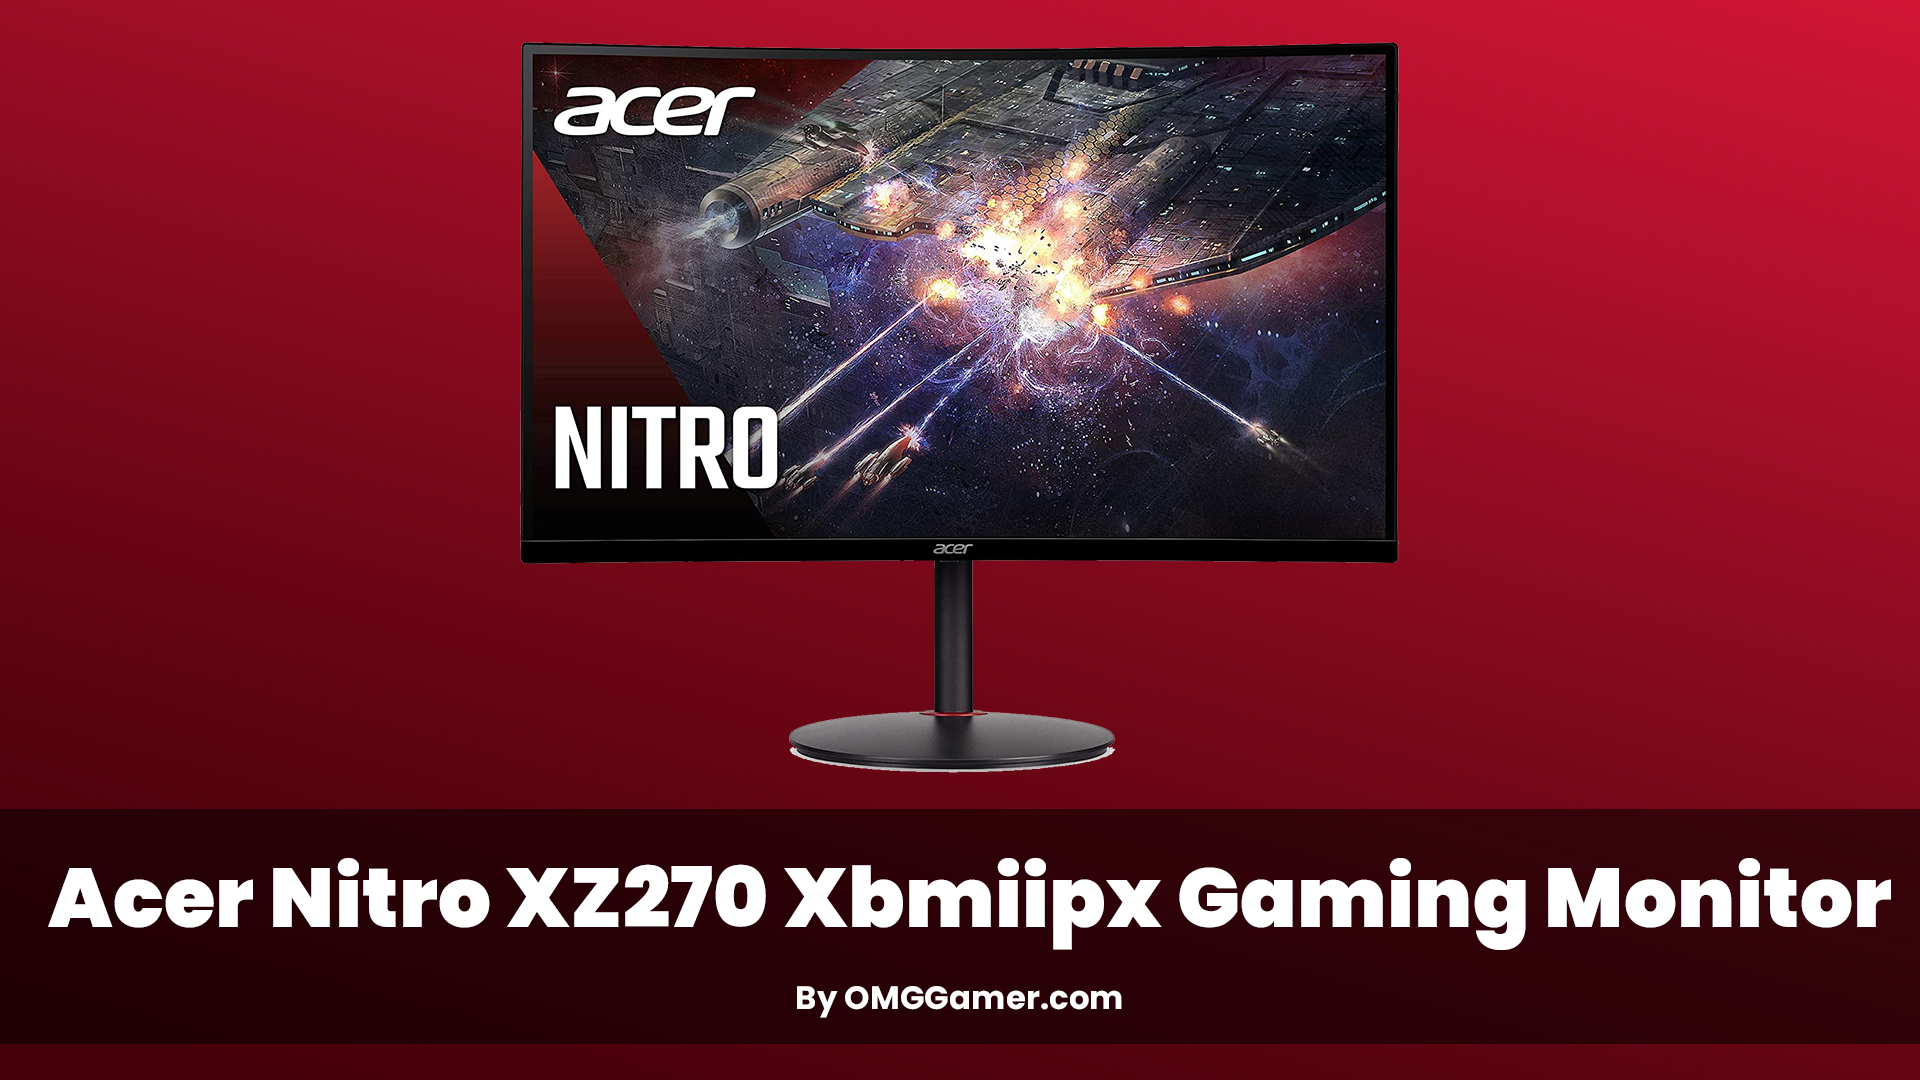 Acer Nitro XZ270 Xbmiipx Gaming Monitor